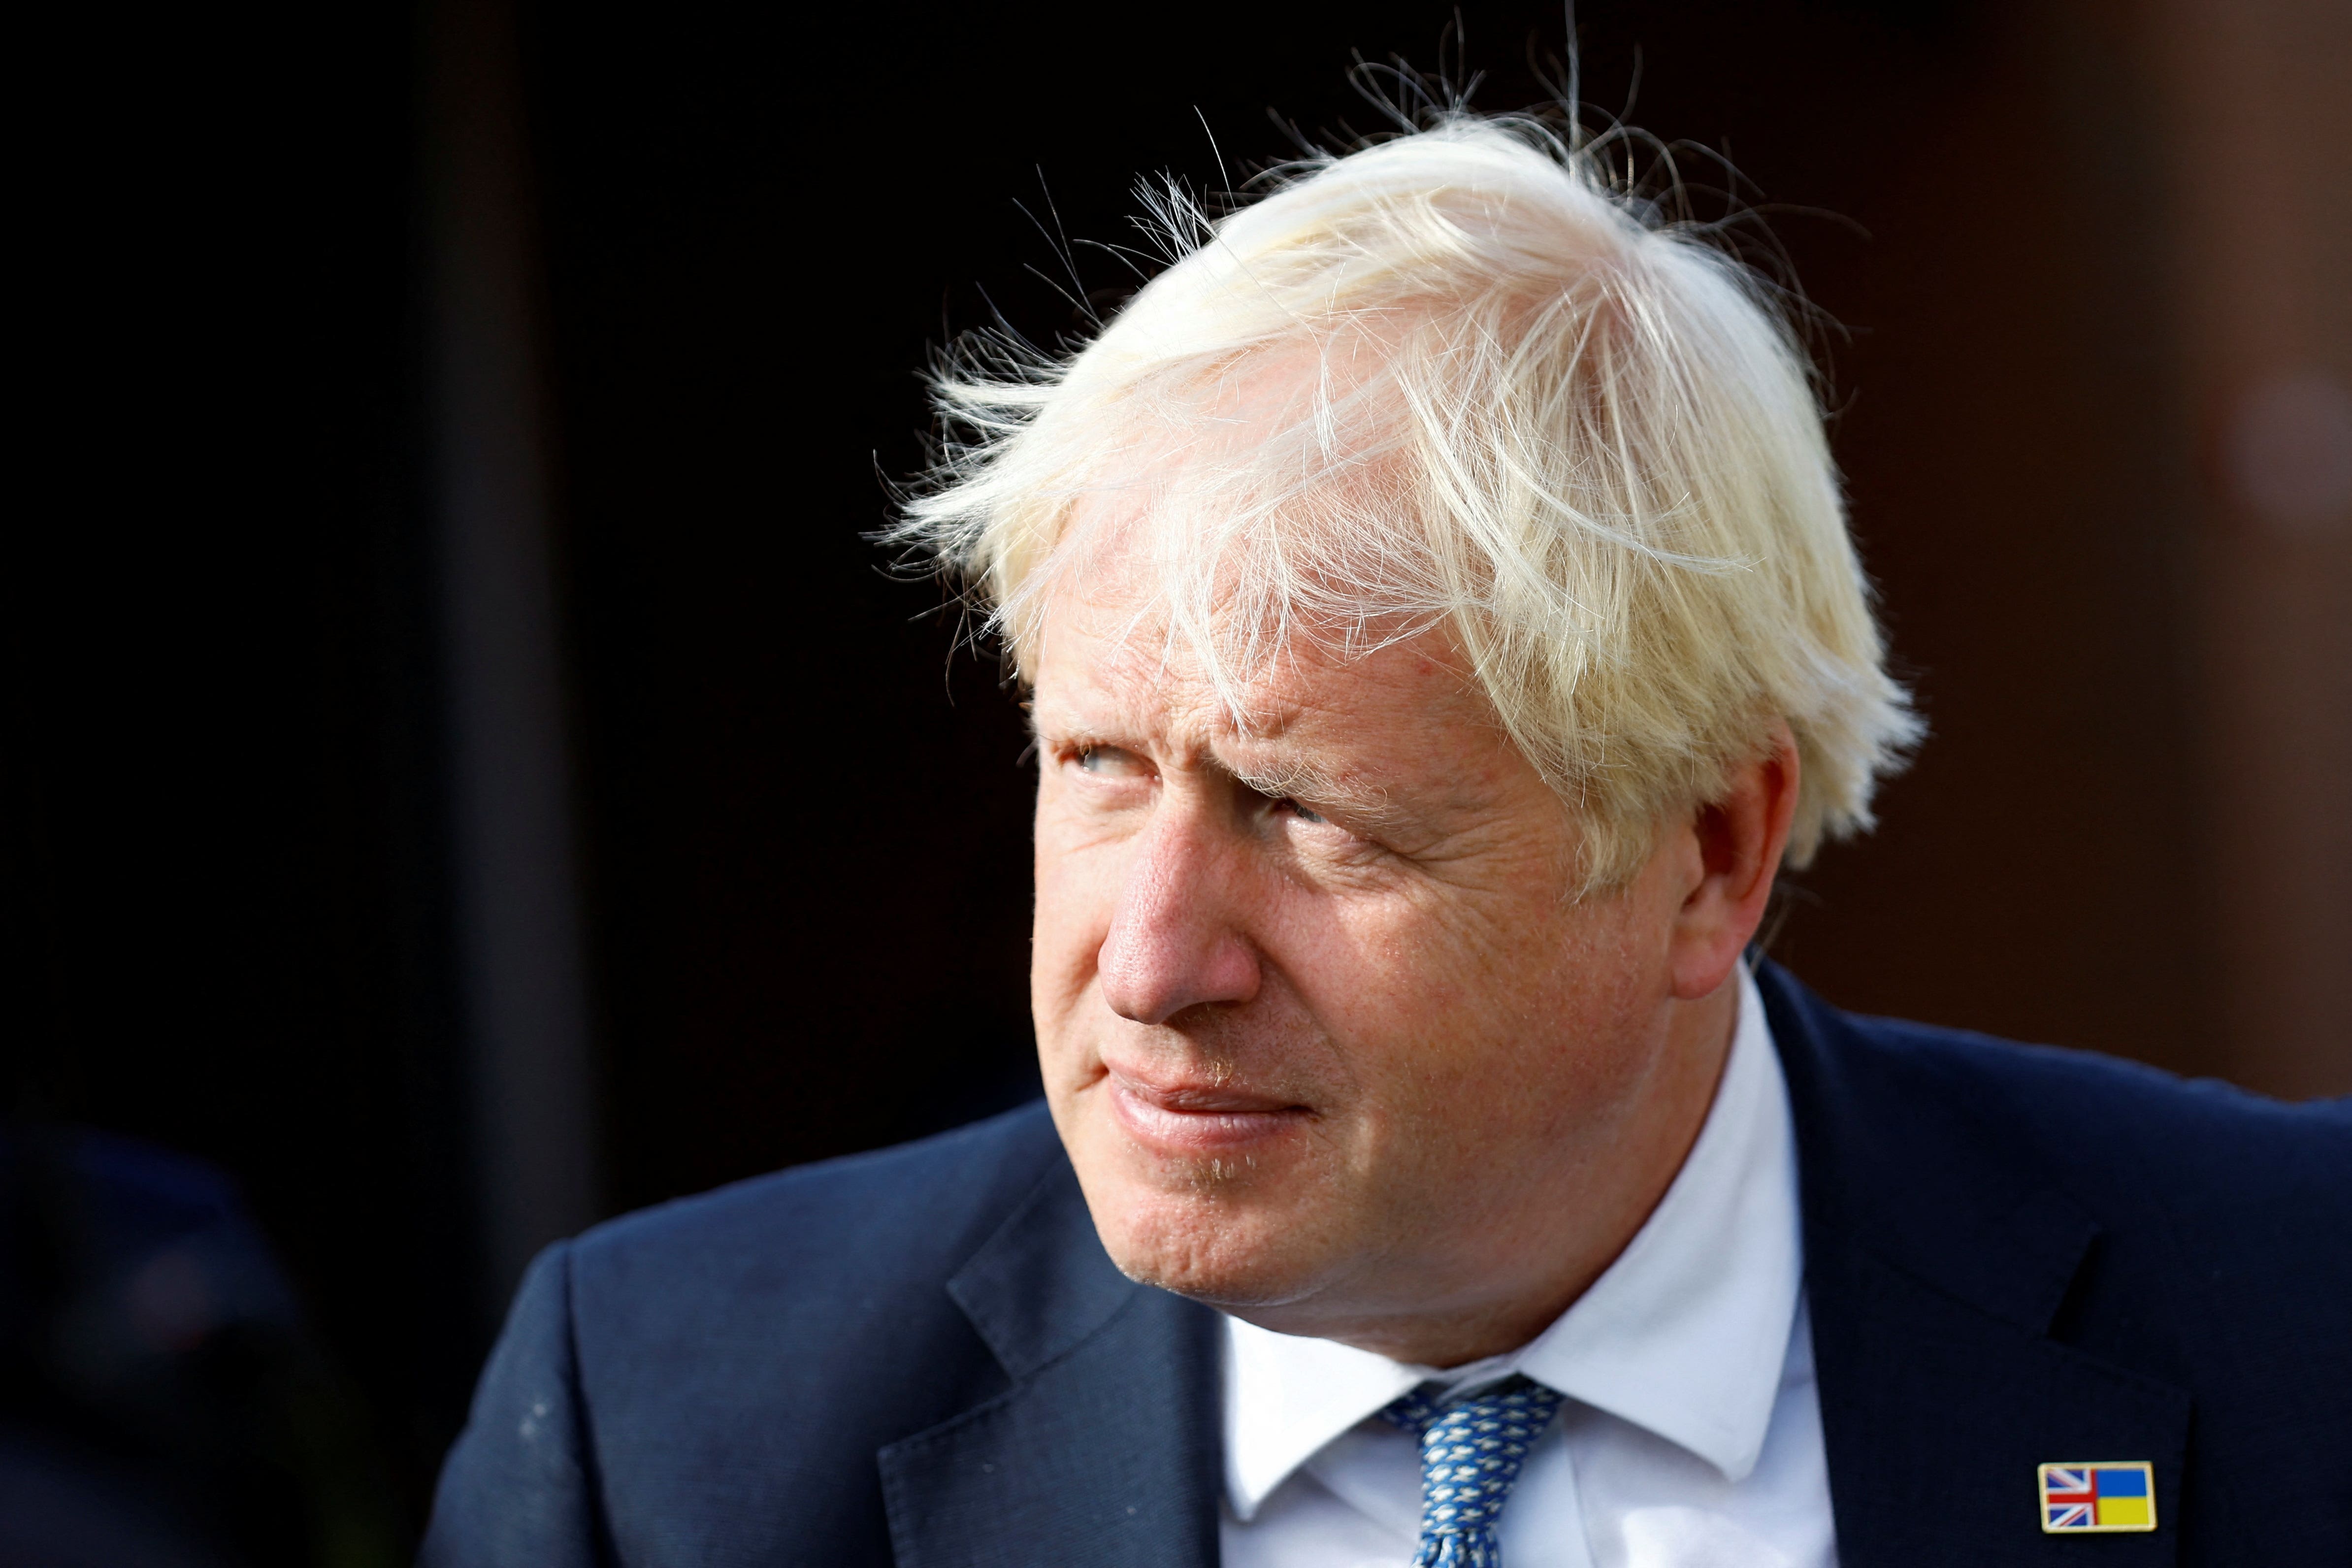 Boris Johnson has proposed sending unredacted messages